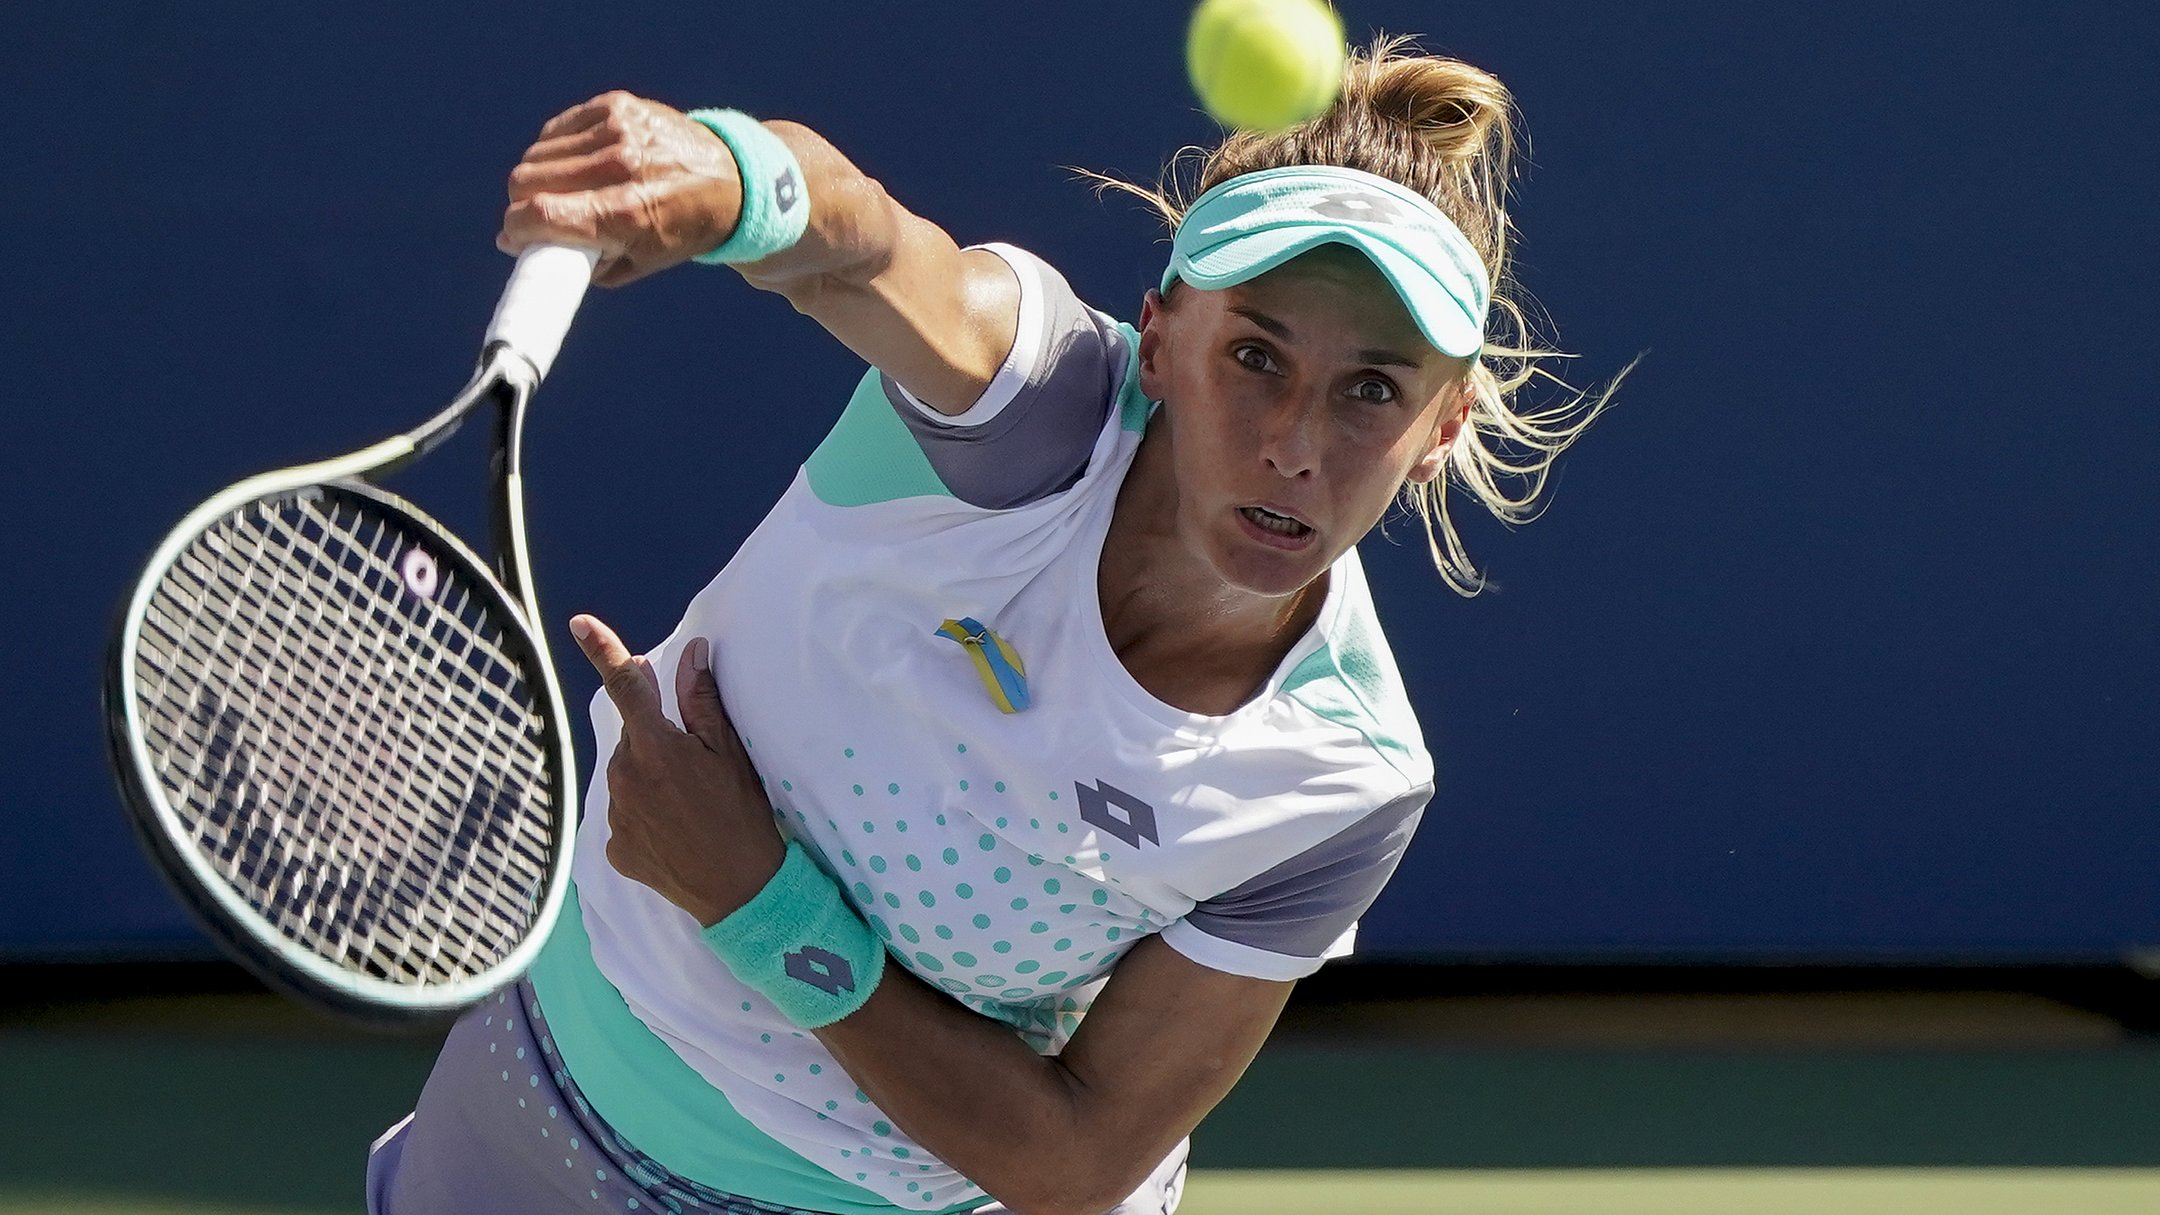 WTA: Цуренко победила в четвертьфинале турнира, Костюк – вылетела